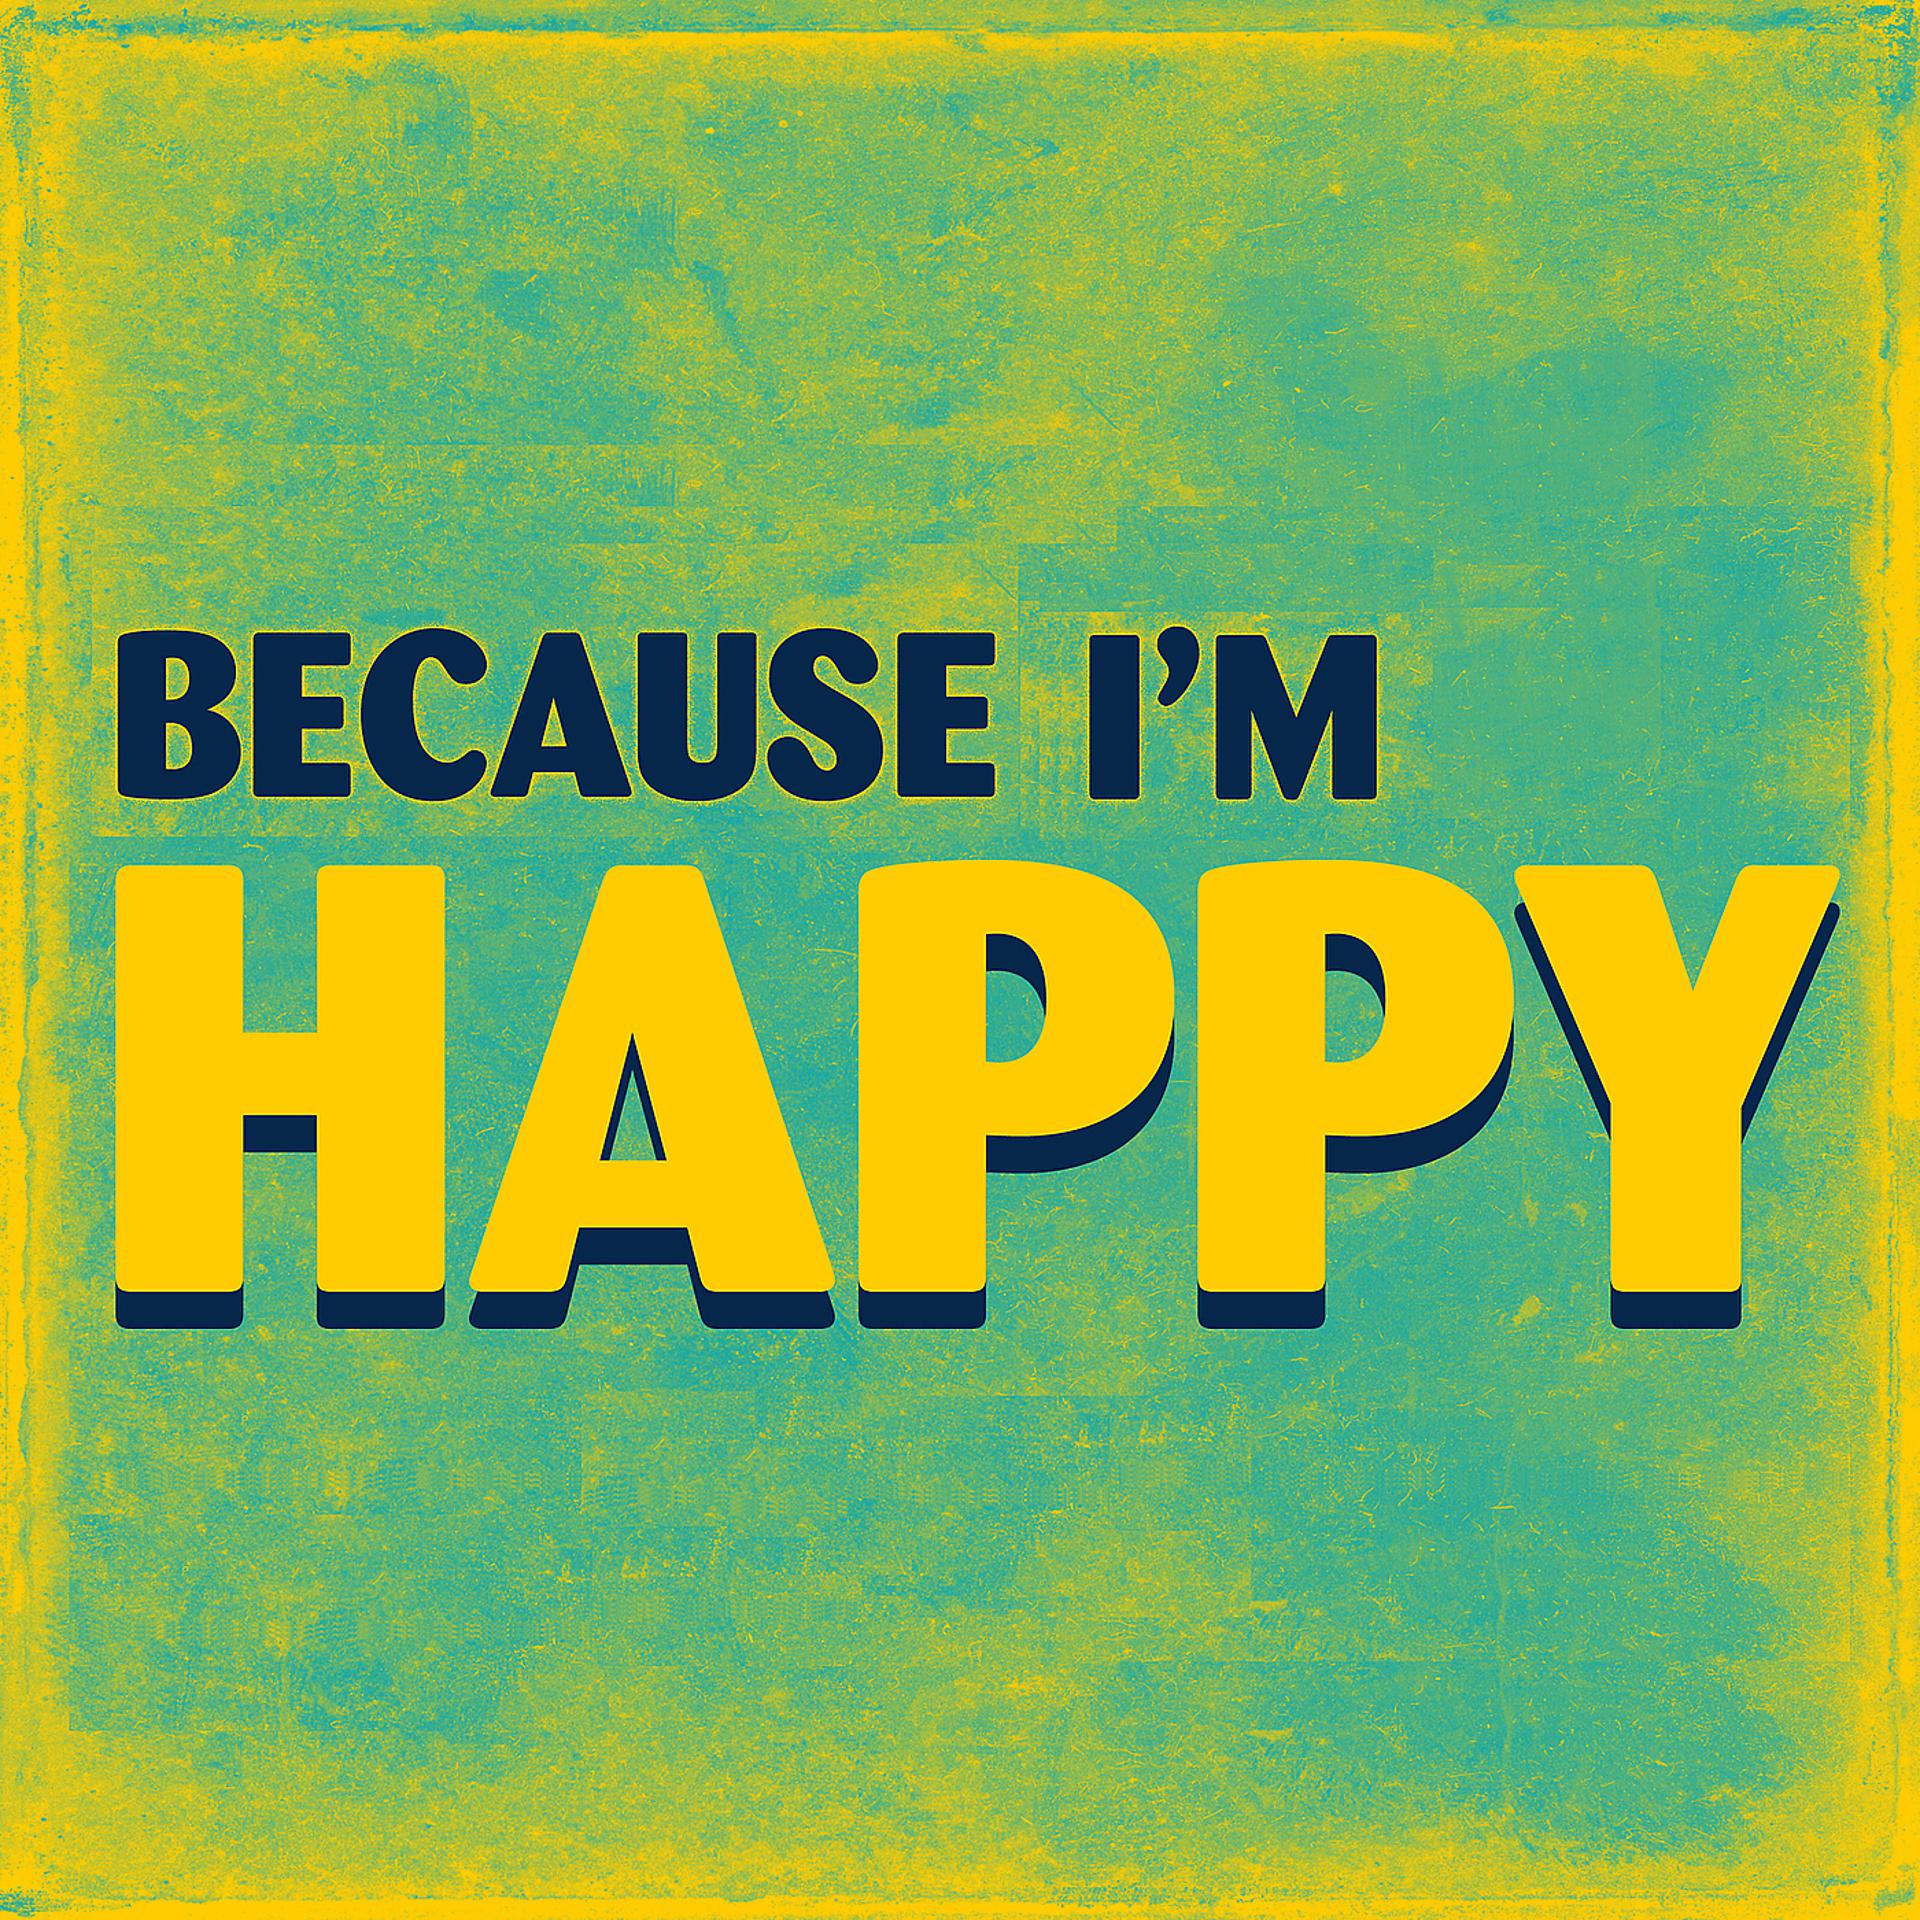 Im be happy. Because im Happy. I'M Happy. Because i am Happy.